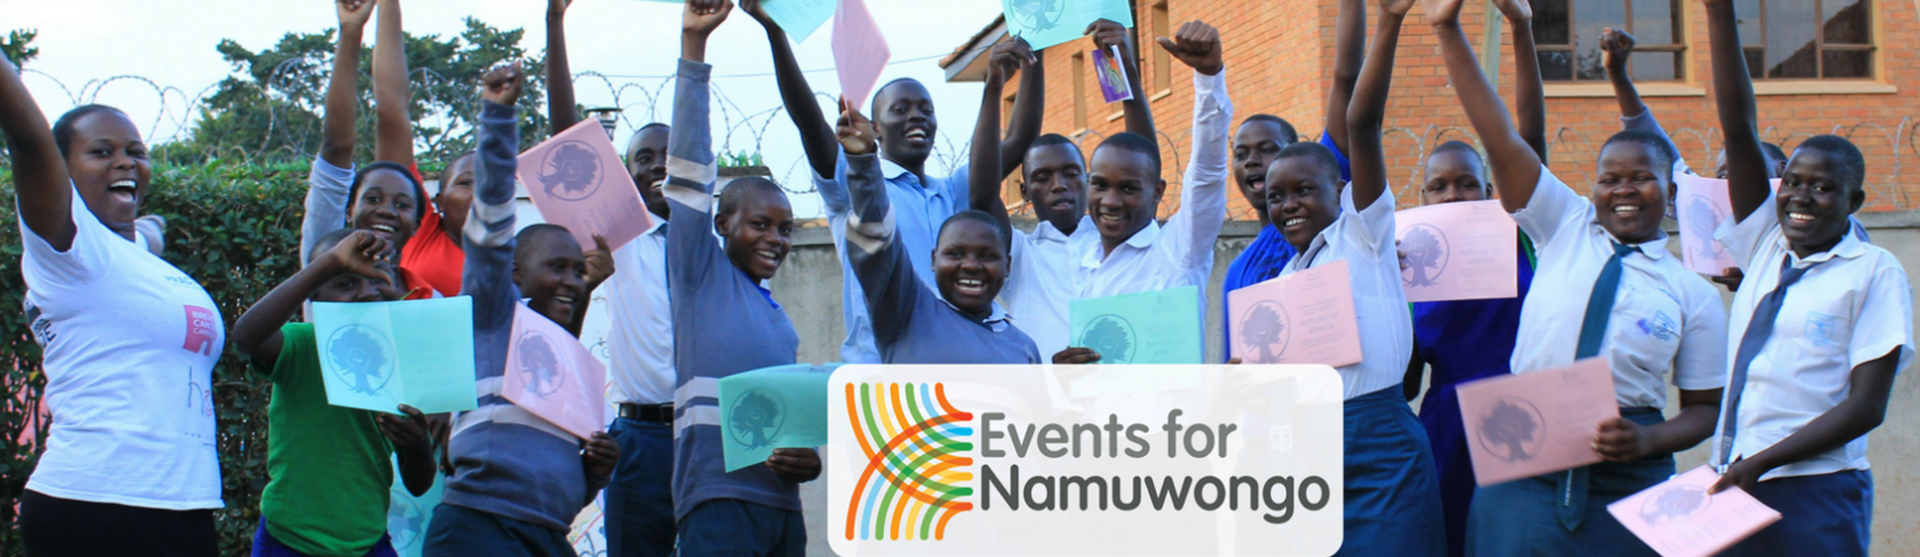 events-for-namuwongo